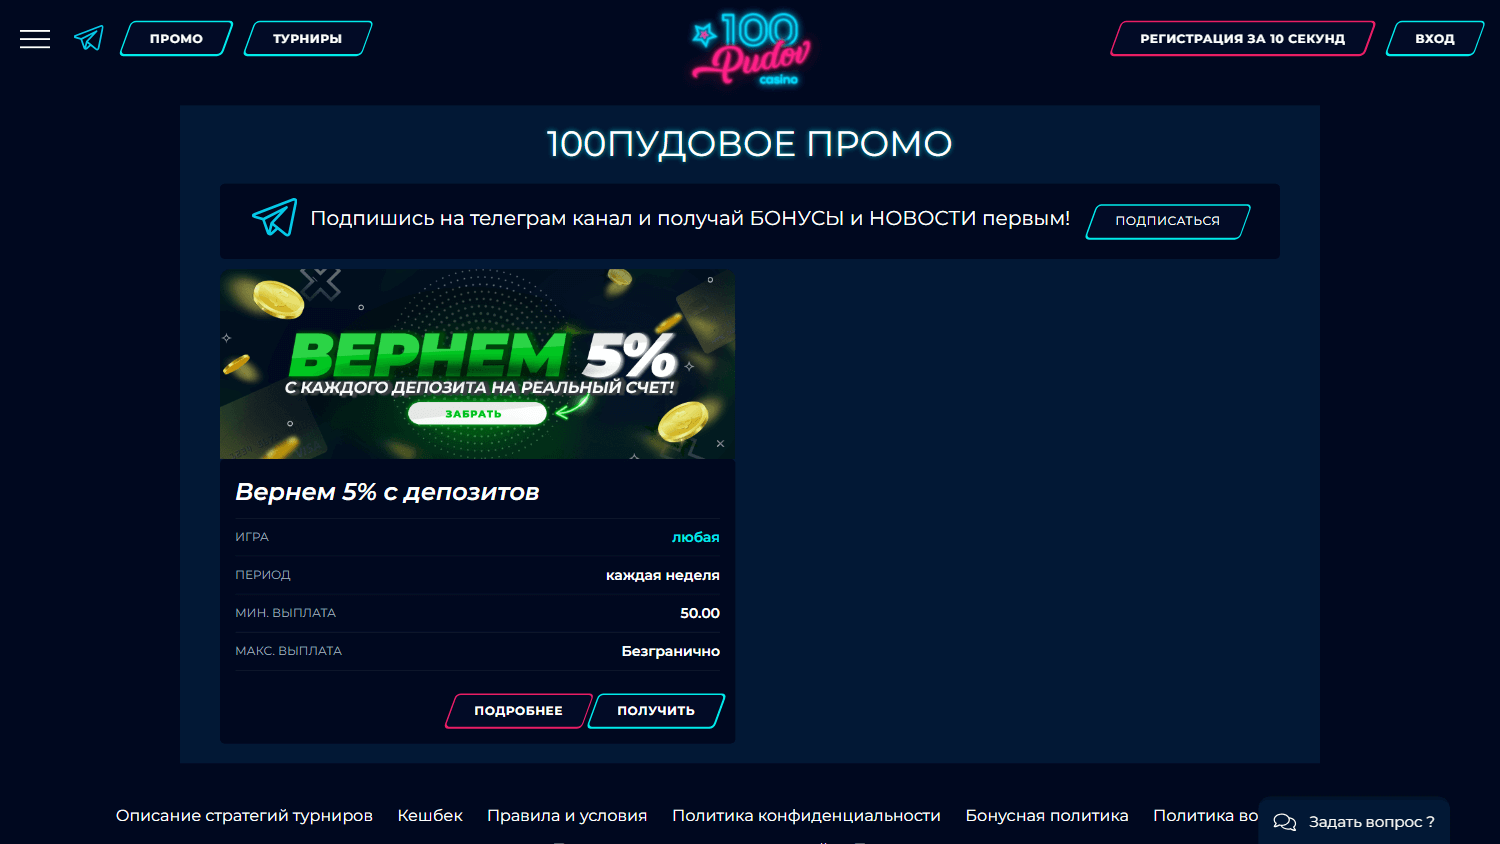 100pudov_casino_promotions_desktop